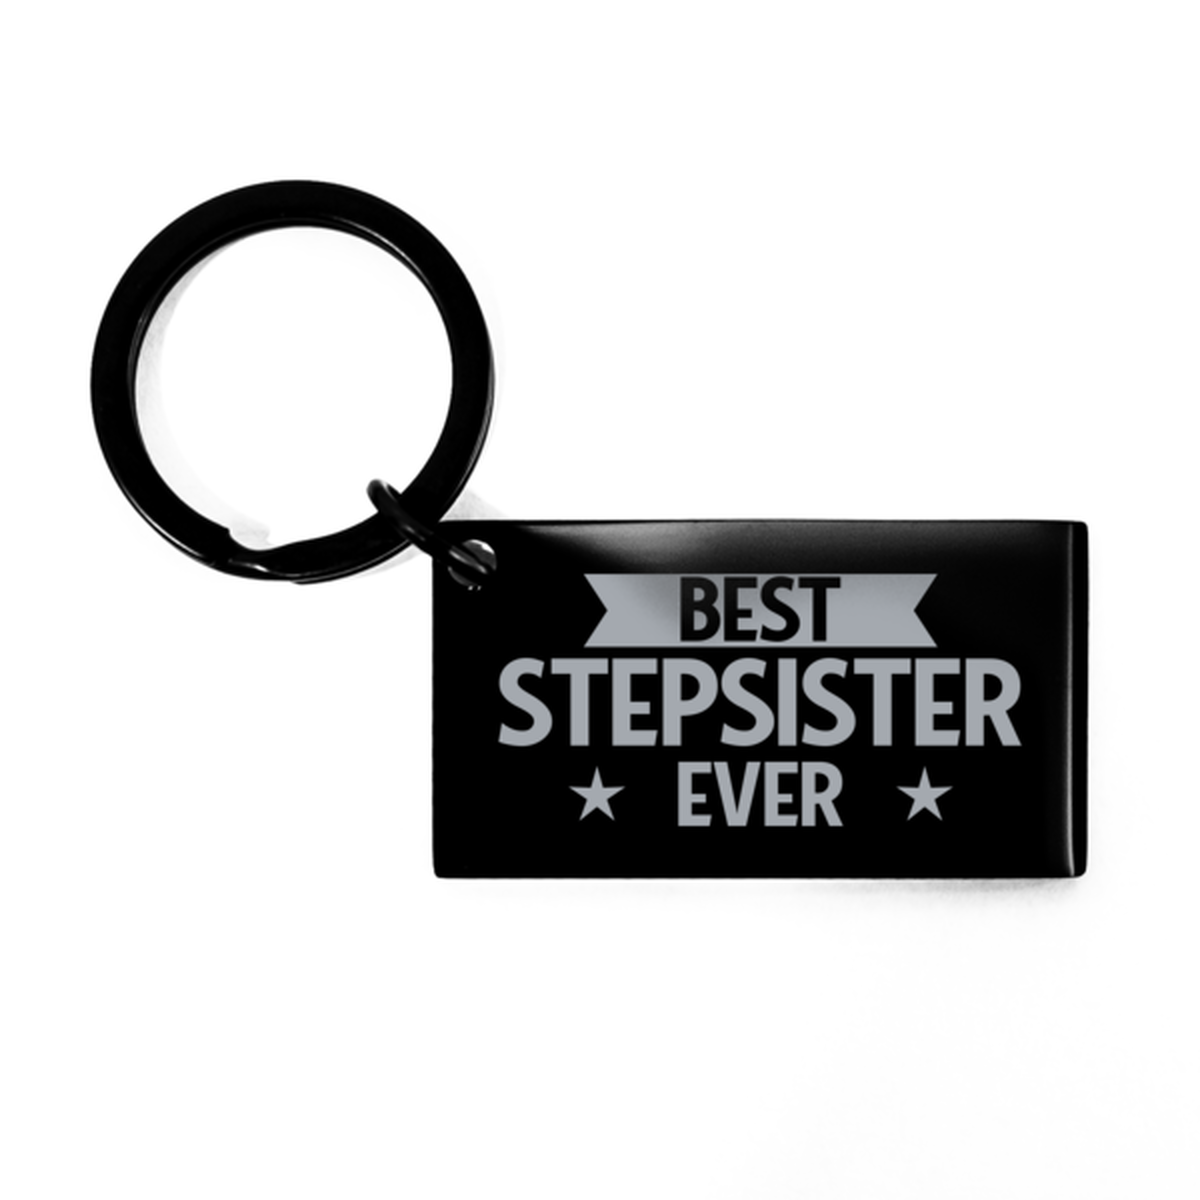 Best Stepsister Ever Stepsister Gifts, Funny Black Keychain For Stepsister, Birthday Engraved Keyring Presents For Women